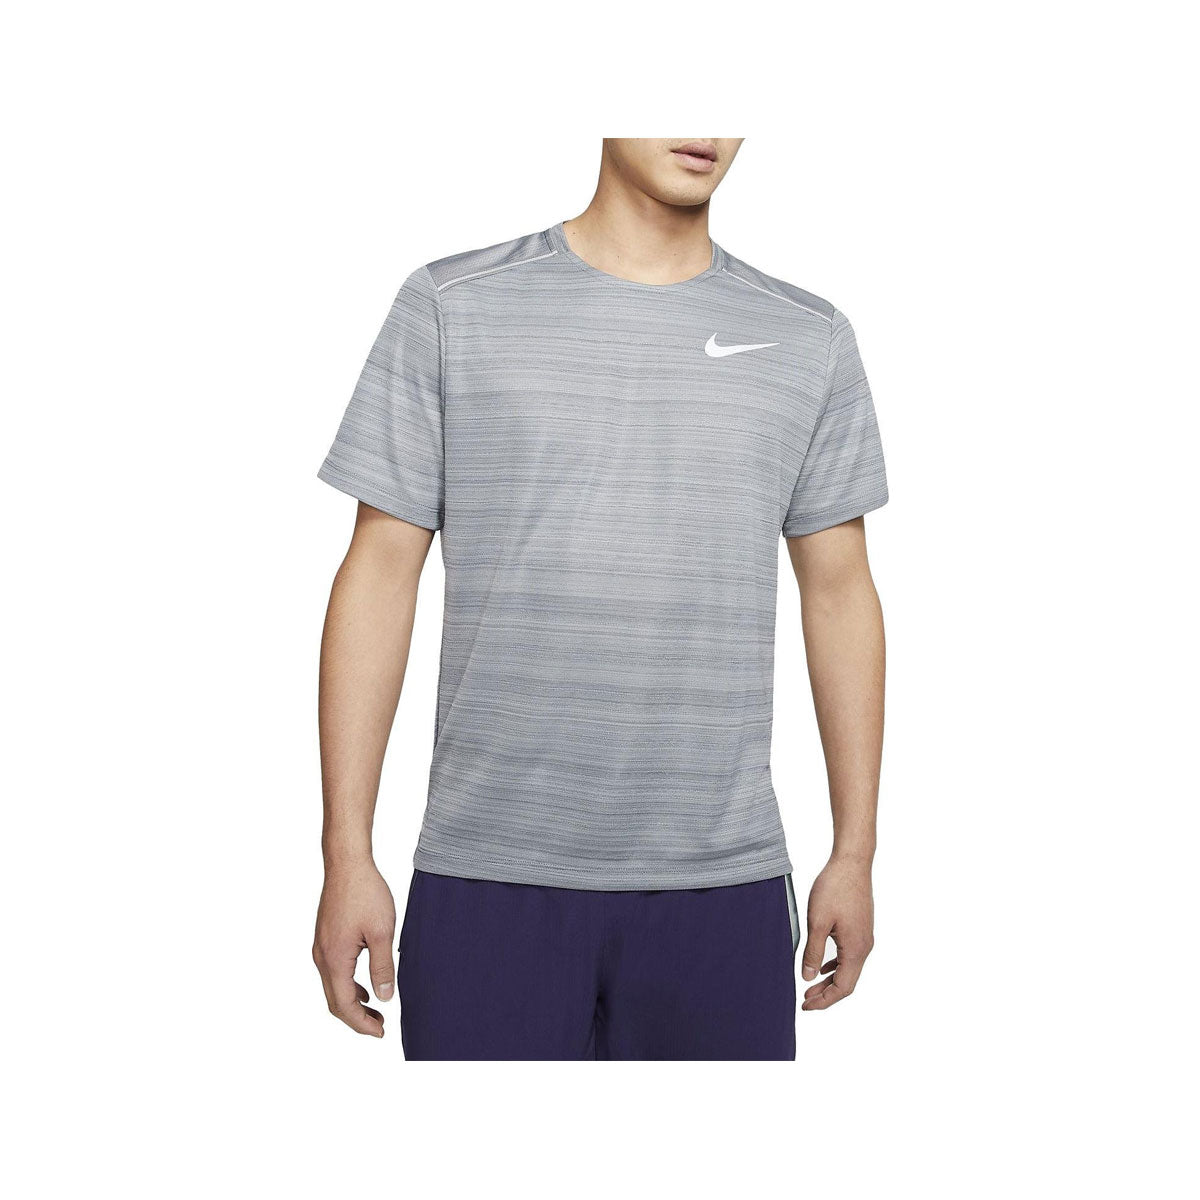 Nike Men's Dry Miler Short Sleeve Top - KickzStore